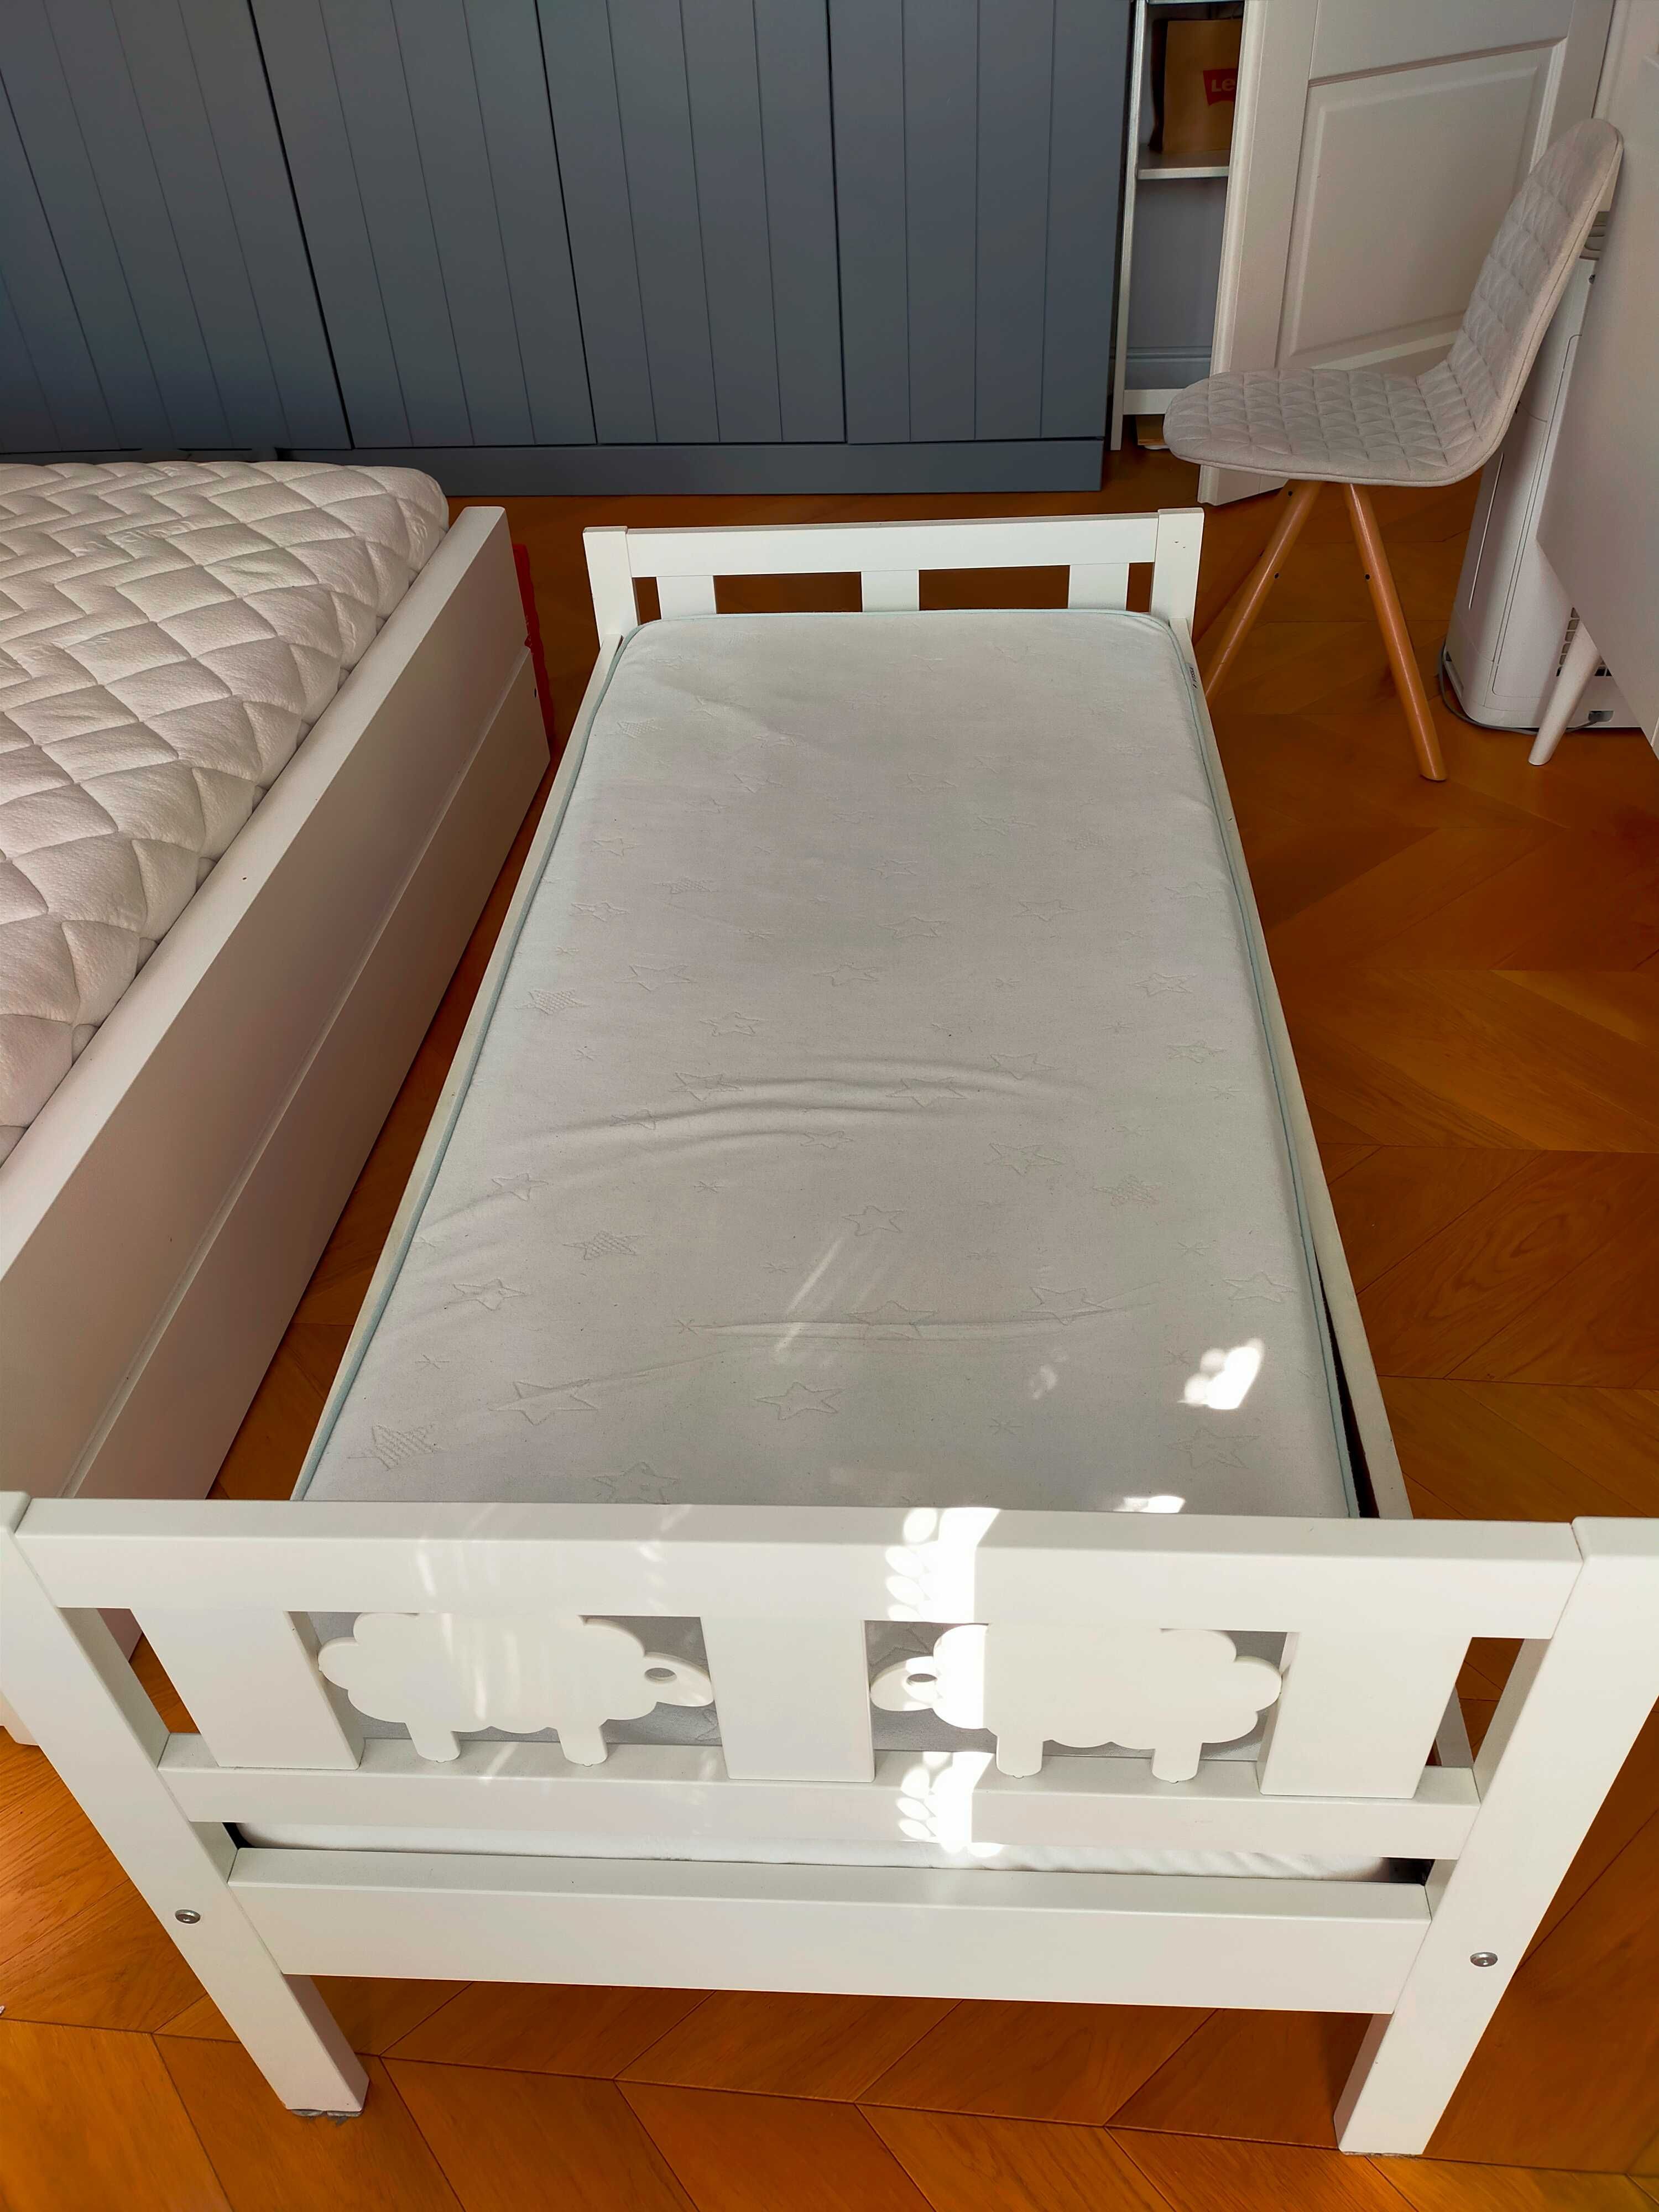 Łóżko Kritter Ikea 70x160 +materac UNDERLING + barierka vikare